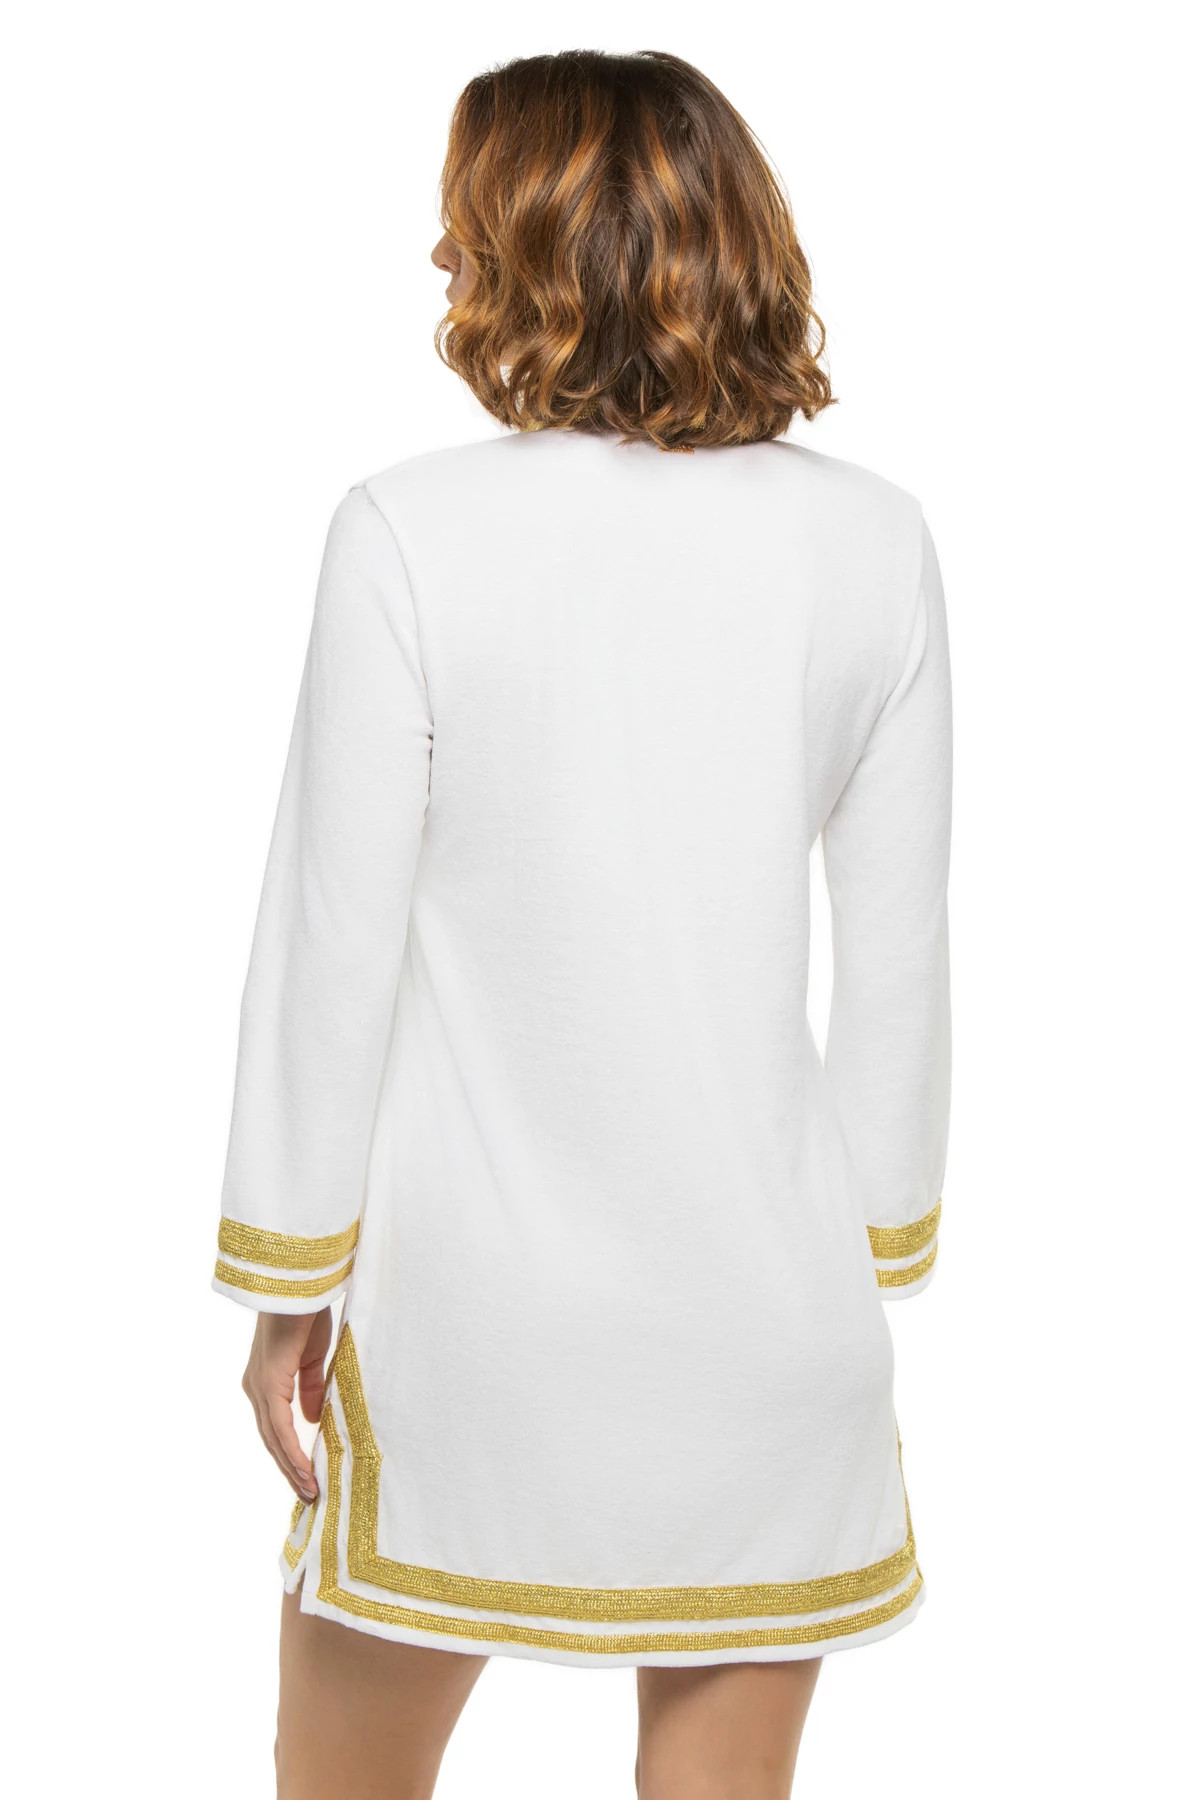 WHITE/GOLD Long Sleeve Tunic image number 2